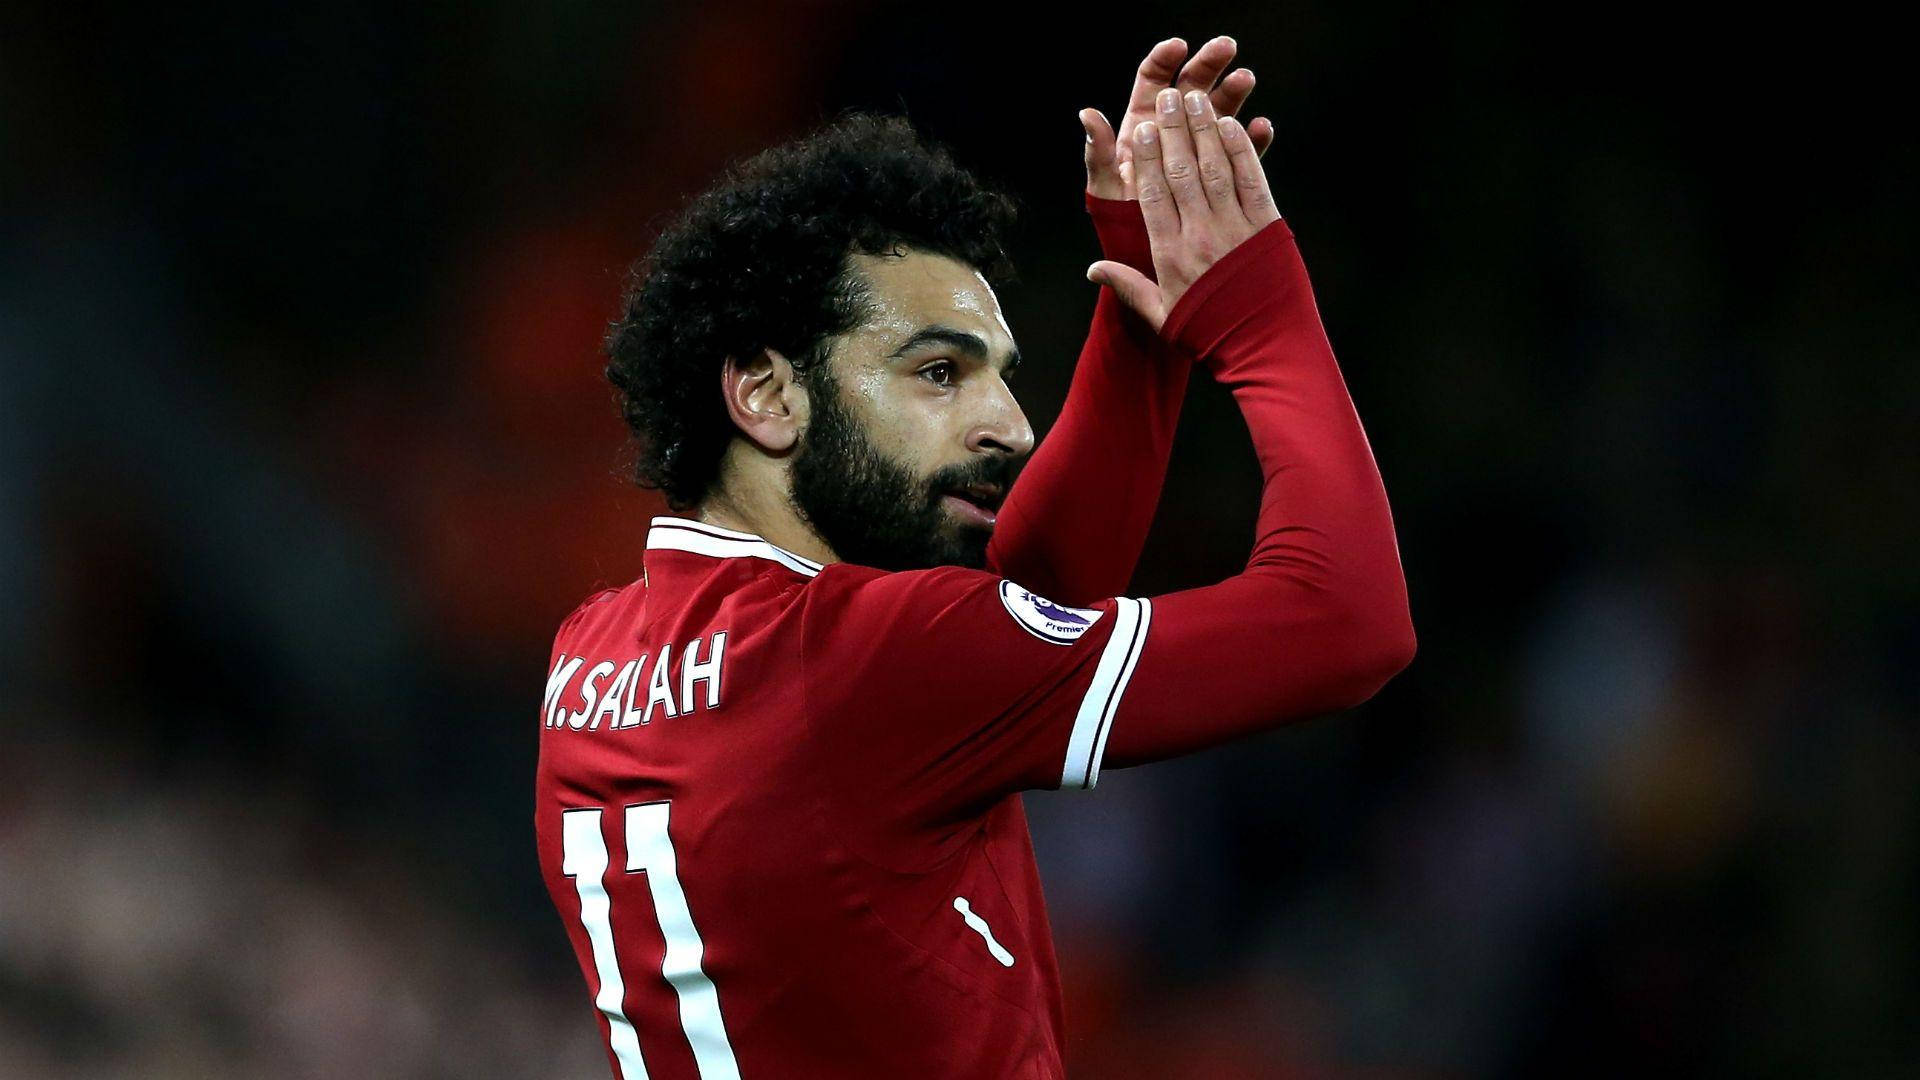 Mohamed Salah Che Applaude Sfondo